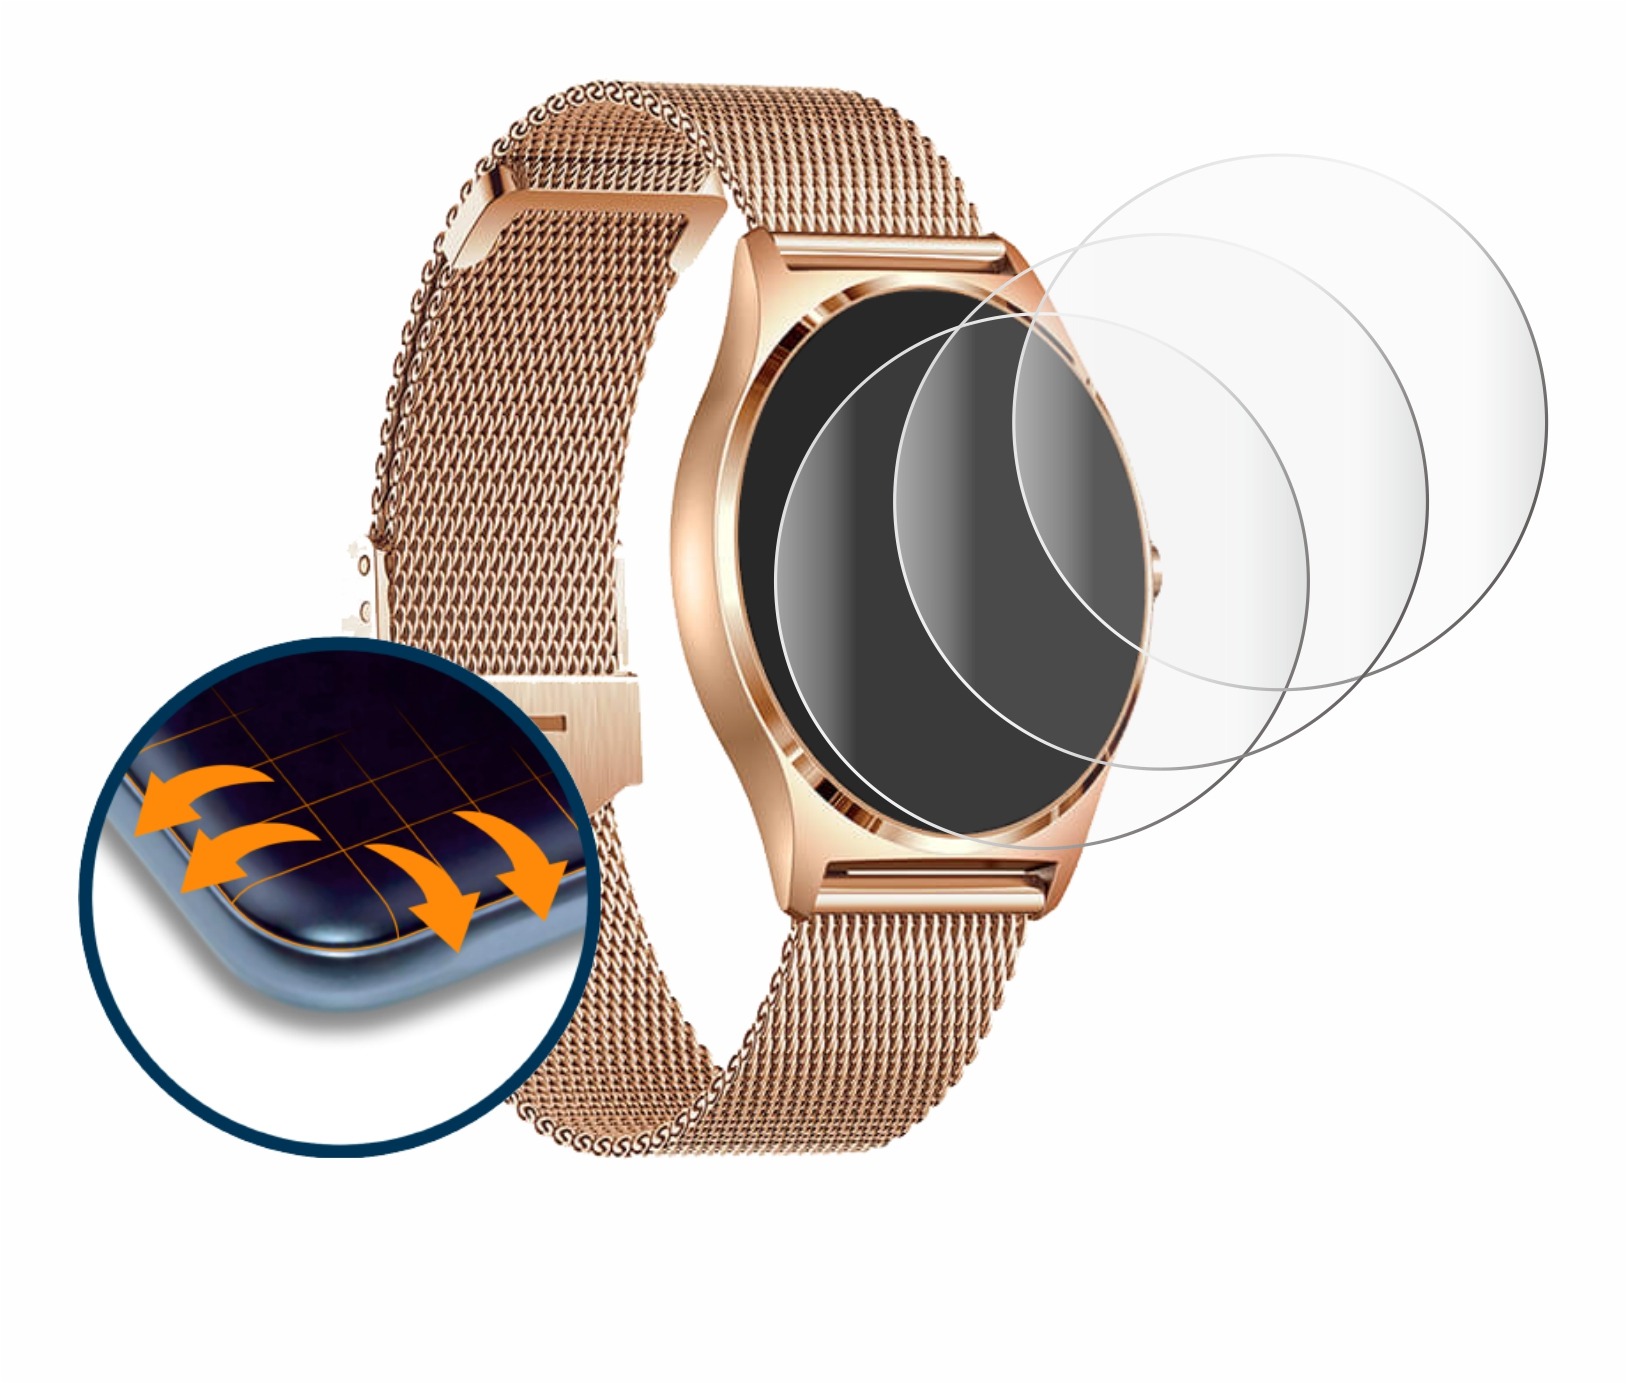 SAVVIES 4x Flex Full-Cover 3D Joli Pro) X-Watch Xcoast Curved Schutzfolie(für XC